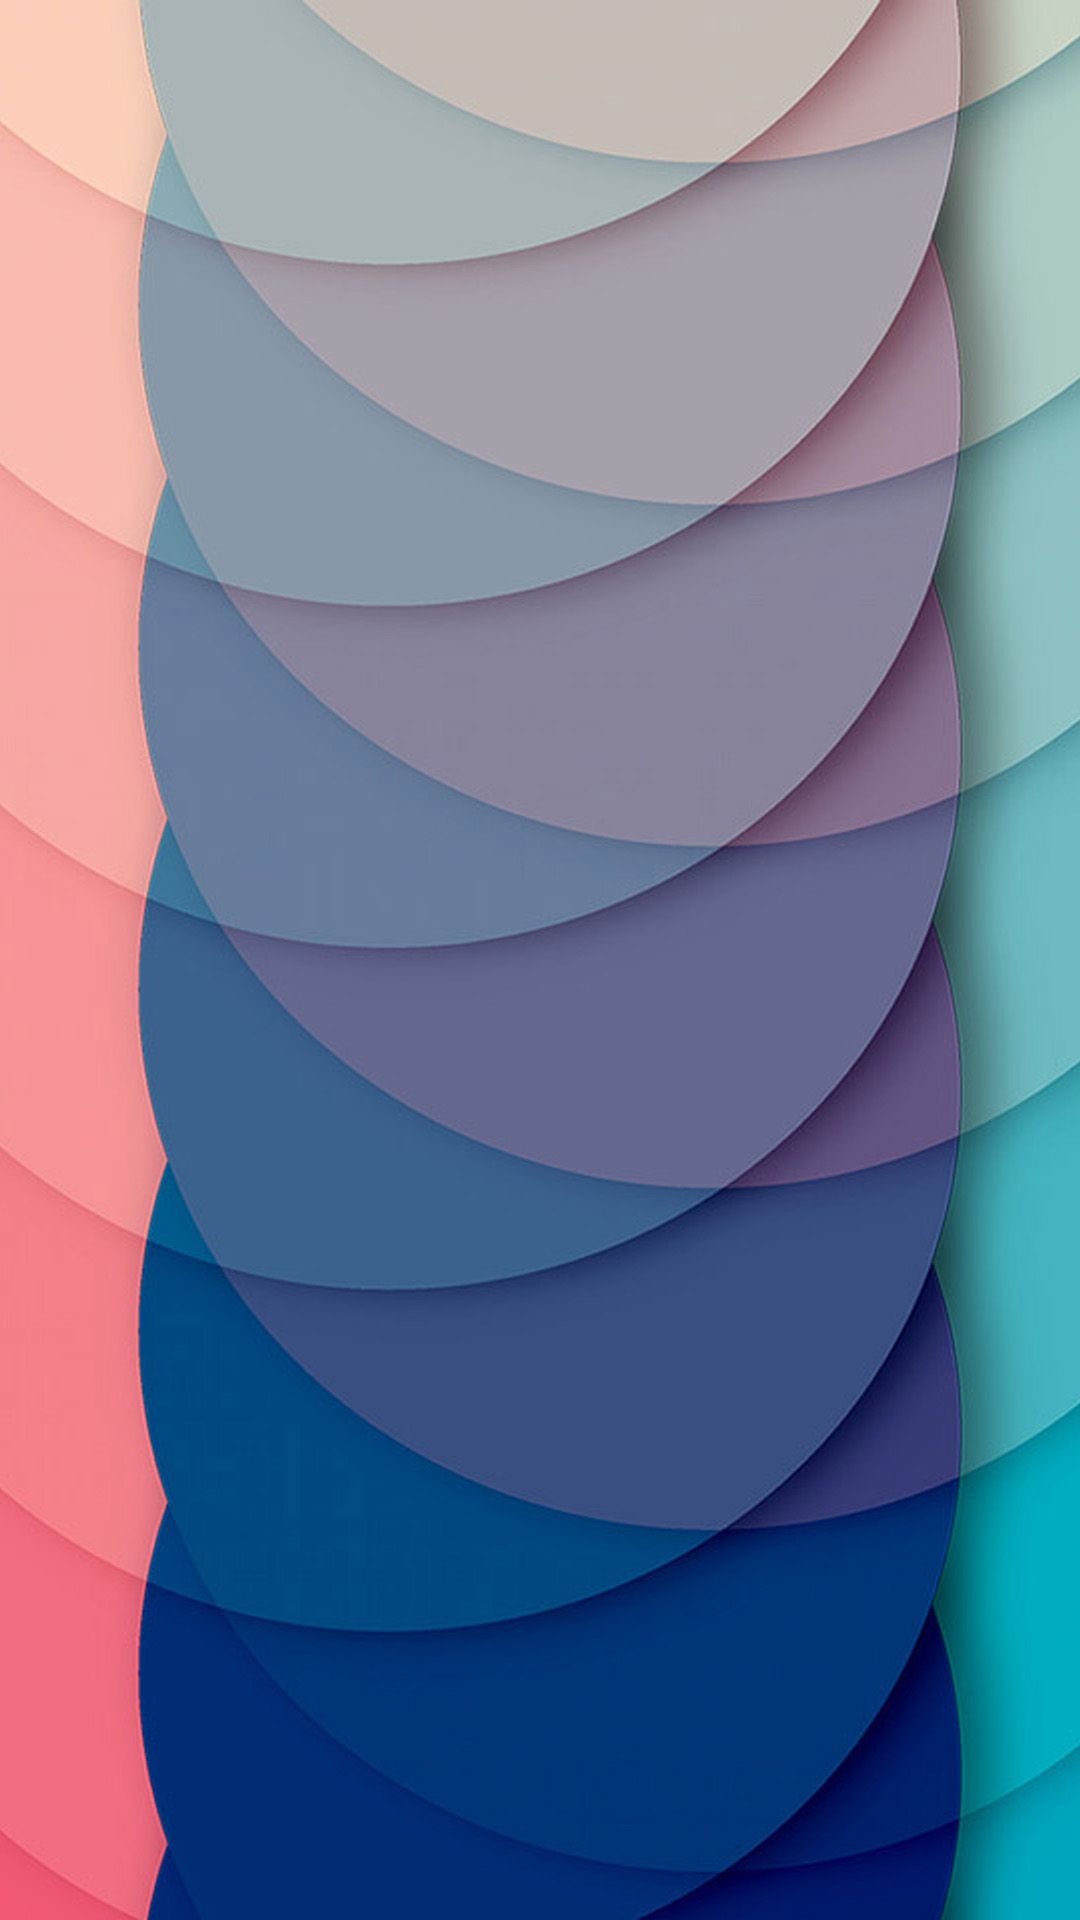 Pastel Wallpapers Free HD Download 500 HQ  Unsplash